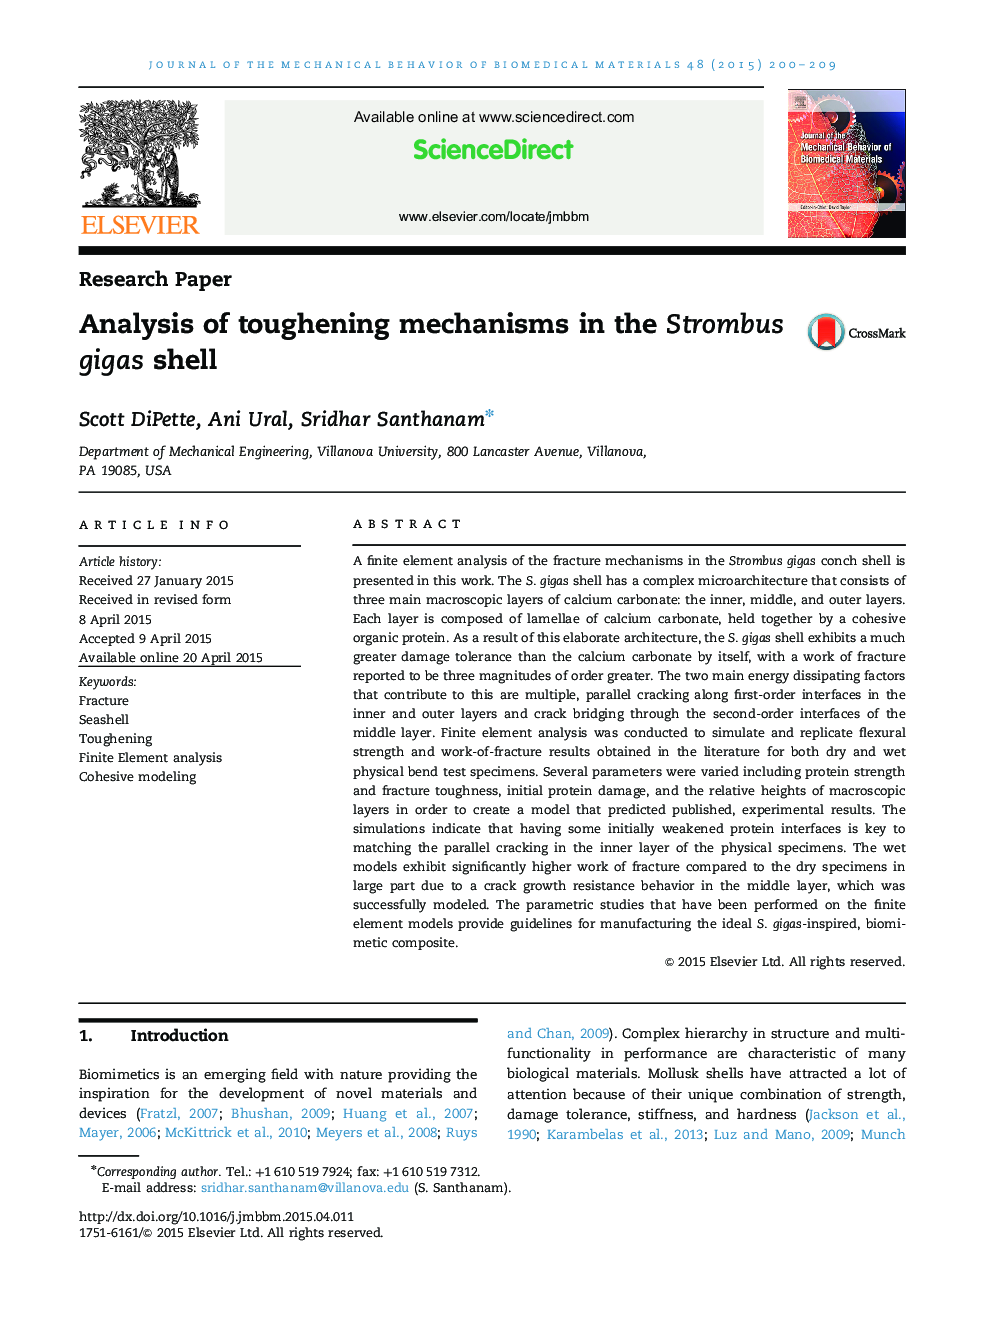 Analysis of toughening mechanisms in the Strombus gigas shell